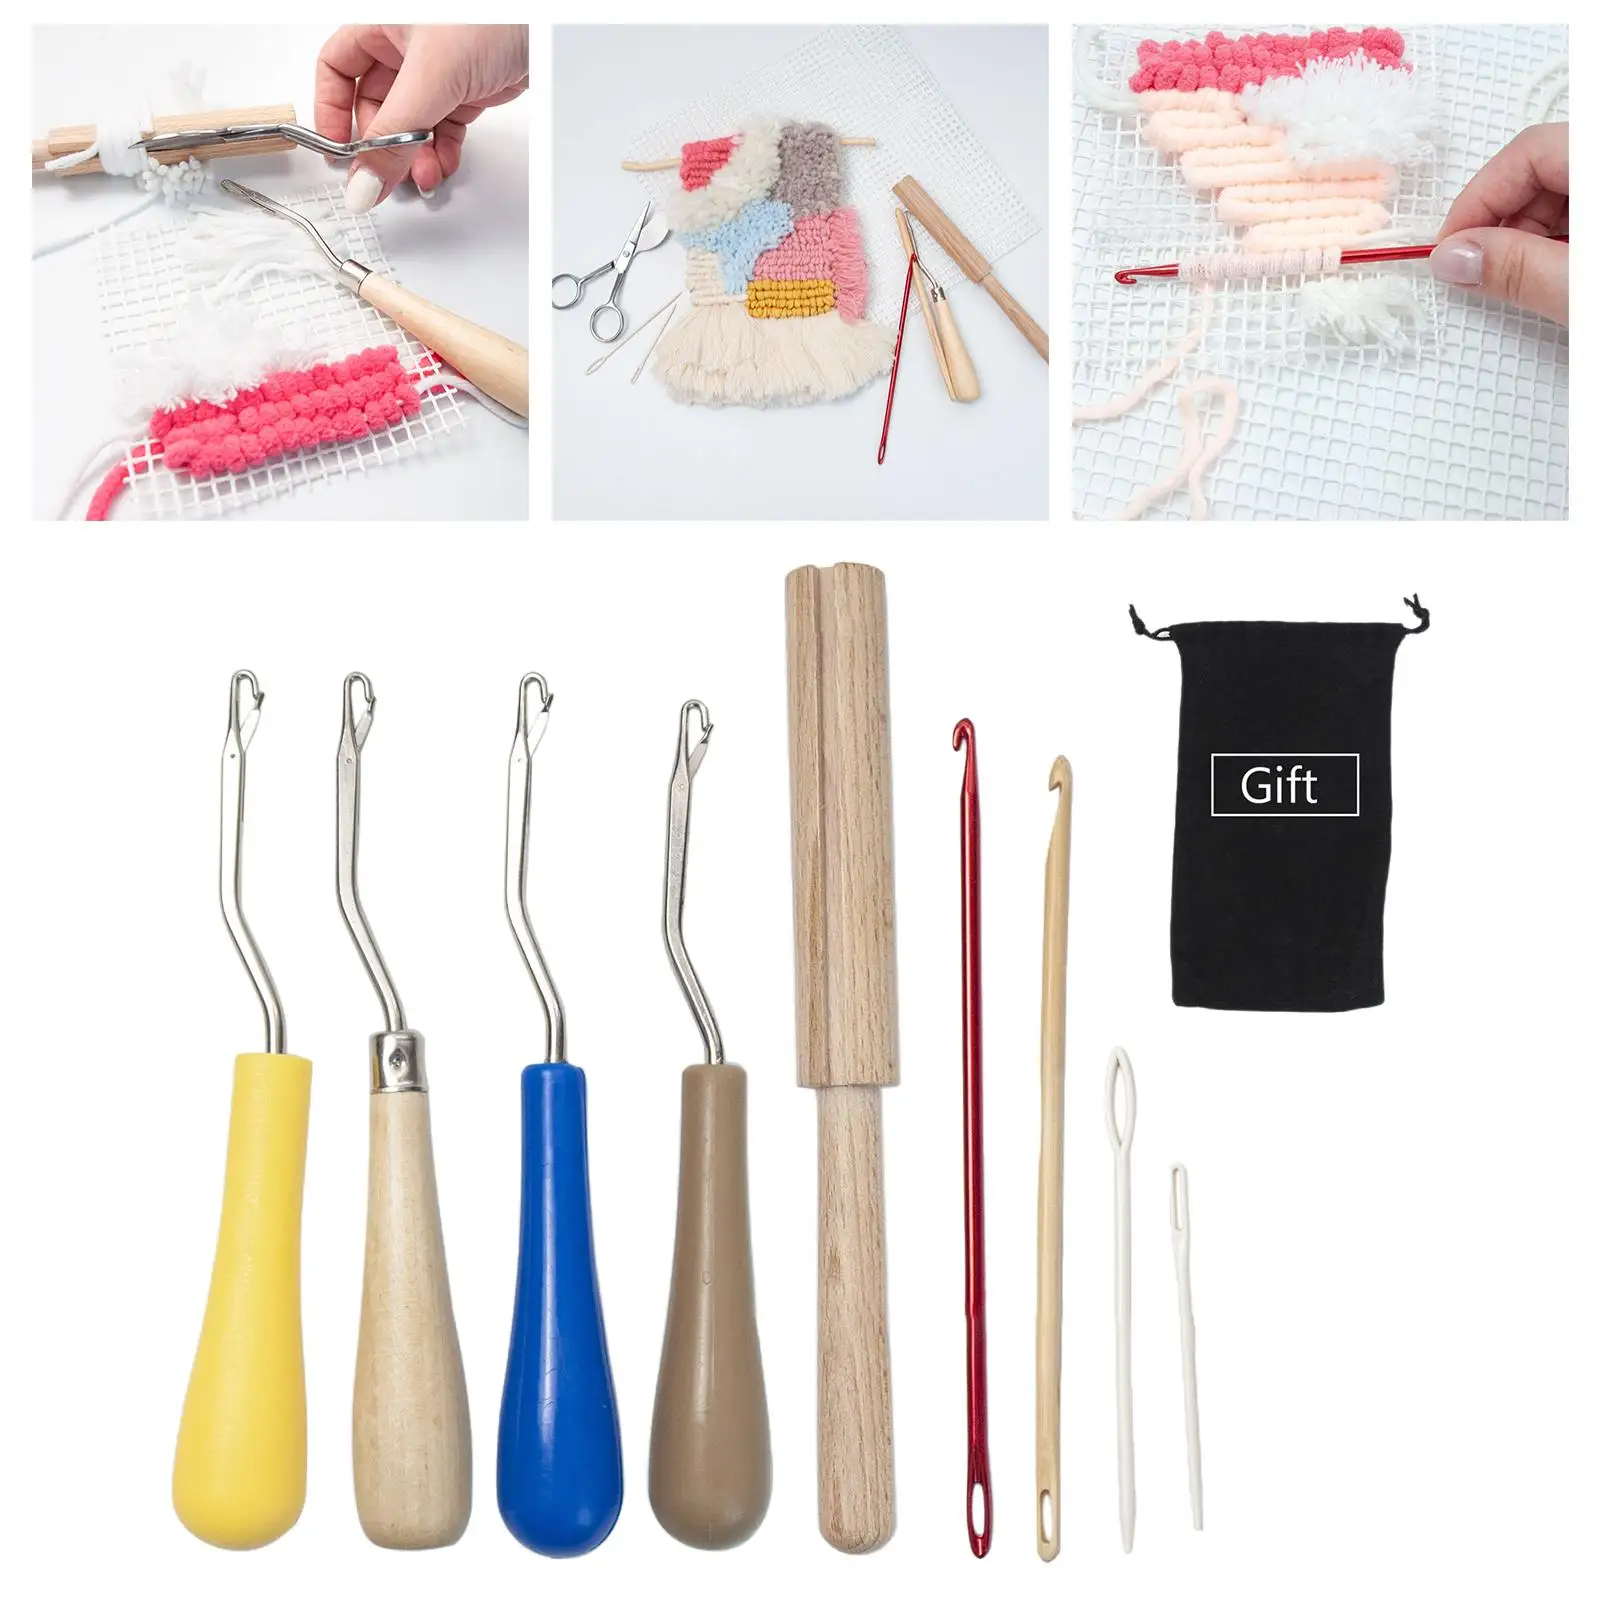 Latch Hook Crochet Pin Wooden Bent Supplies Weaving Needles for Embroidery